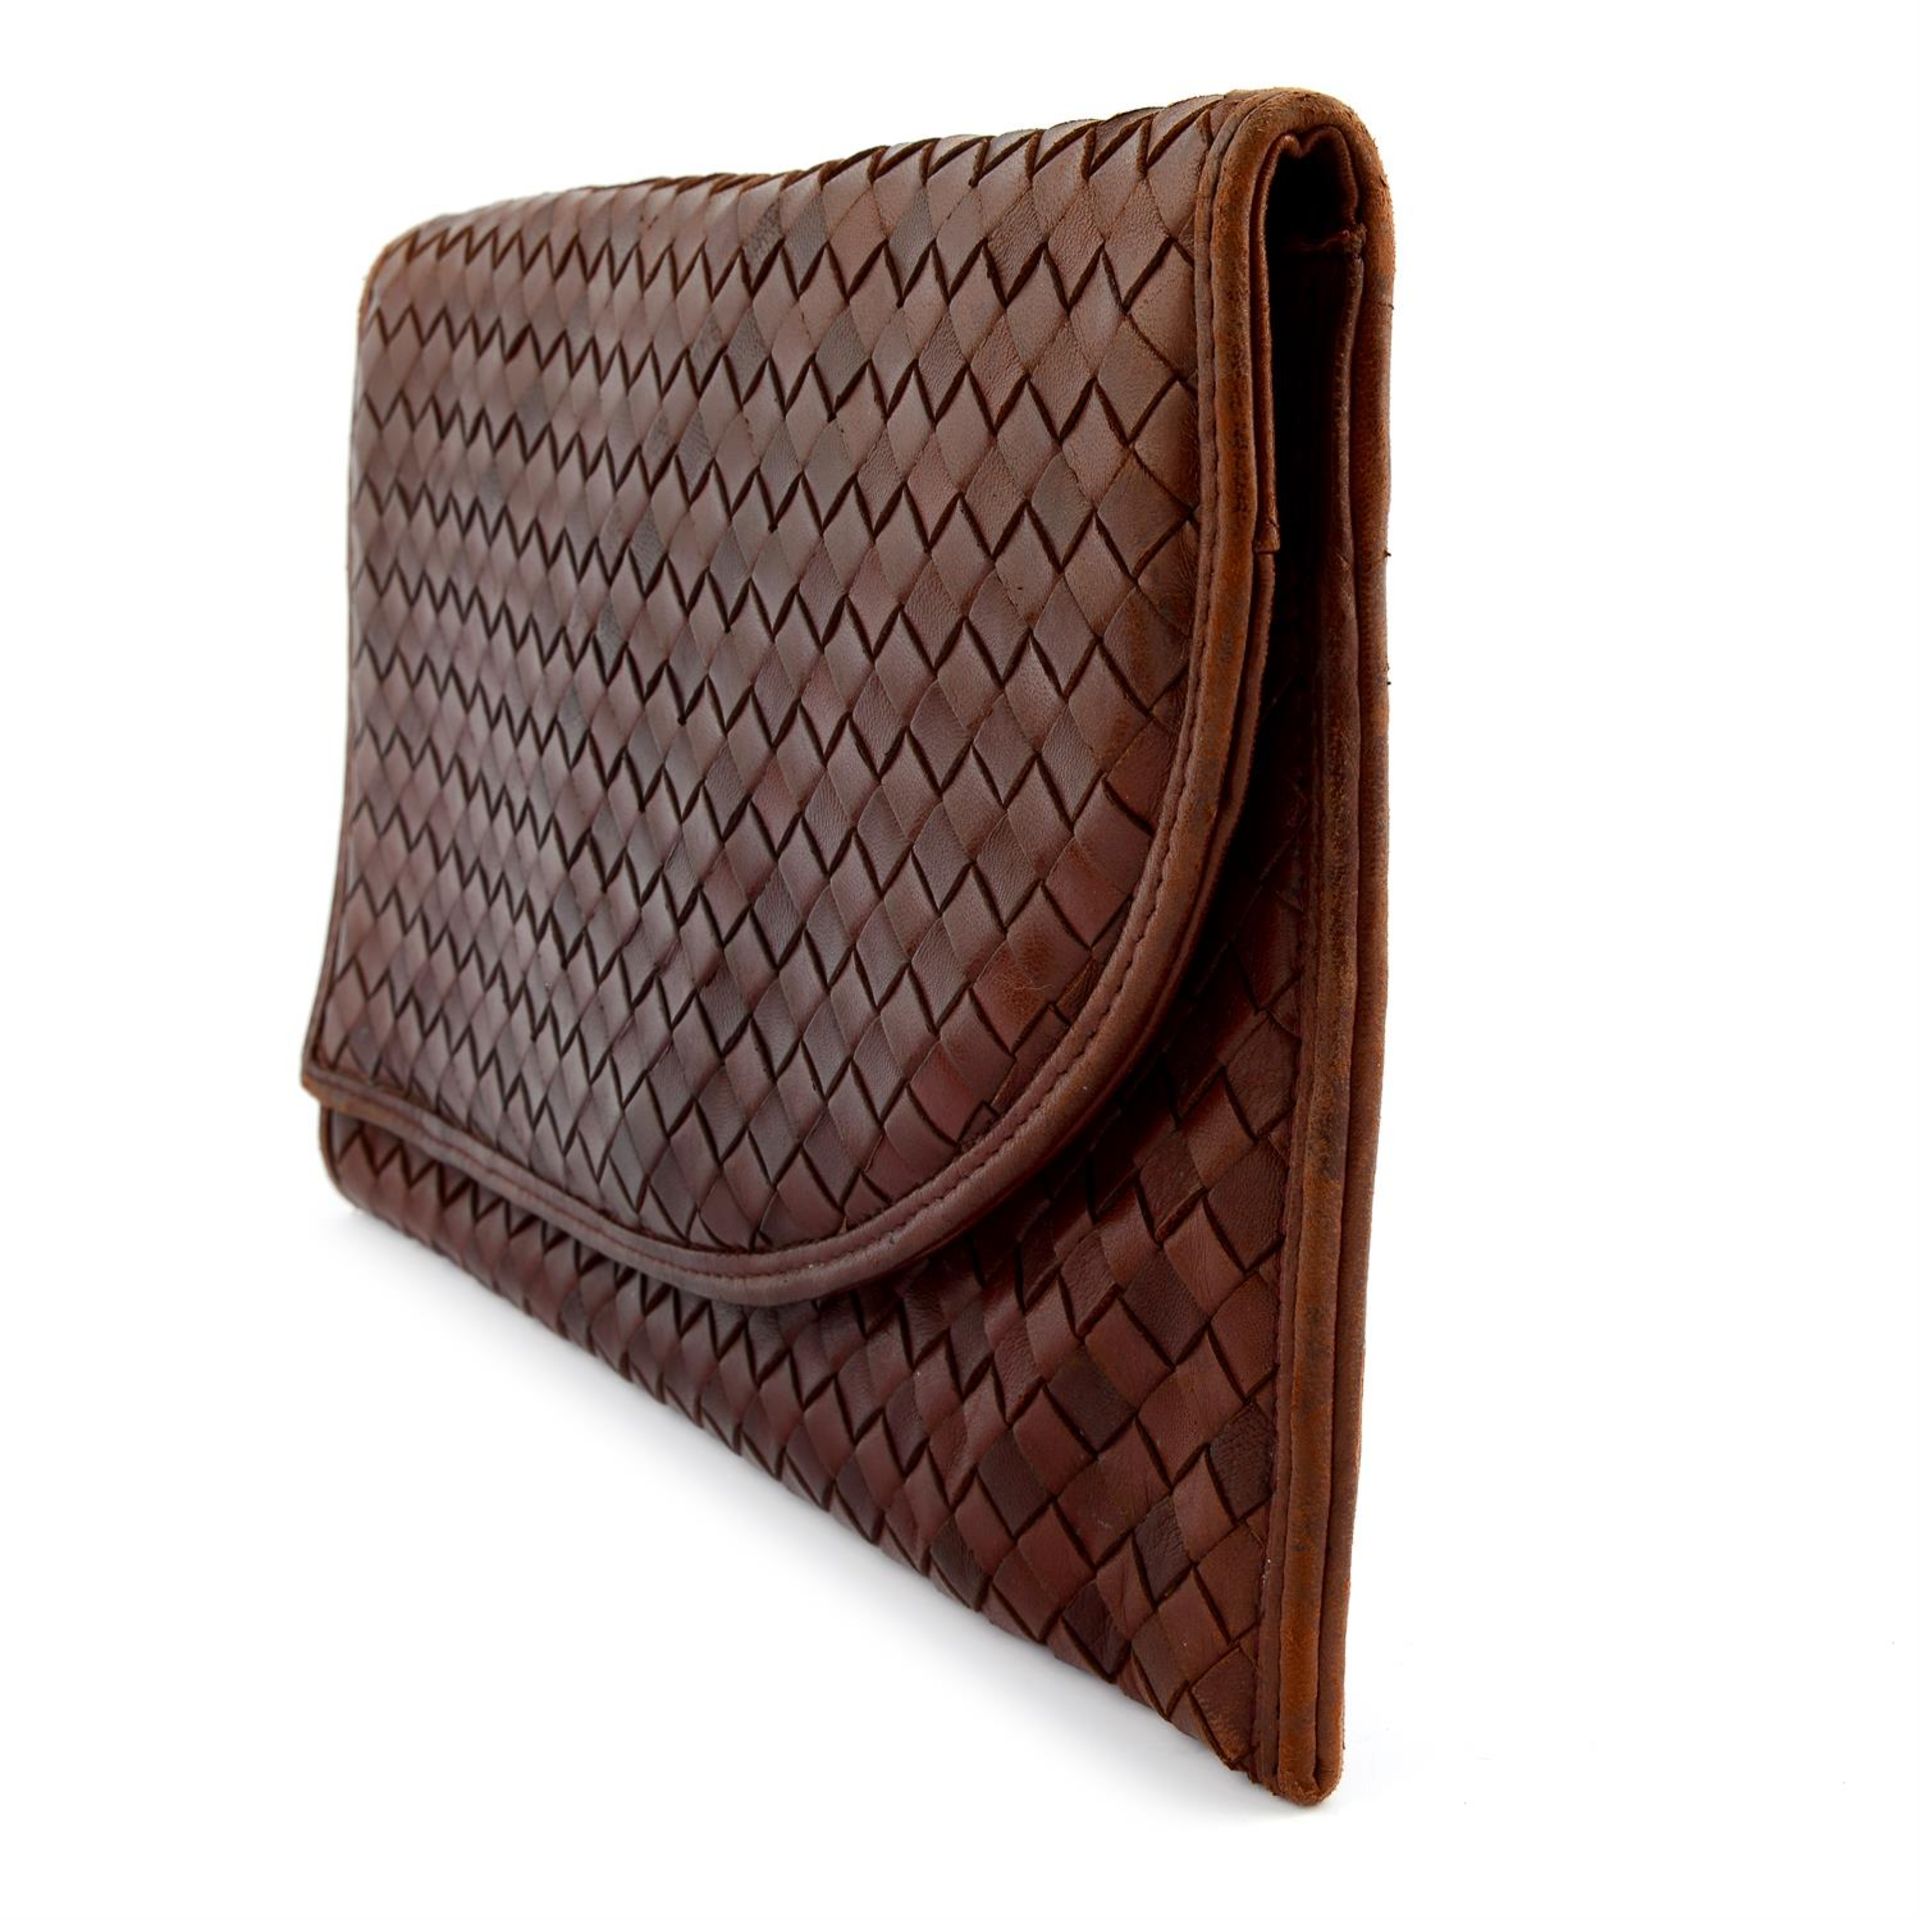 BOTTEGA VENETA - a brown leather clutch bag. - Image 3 of 4